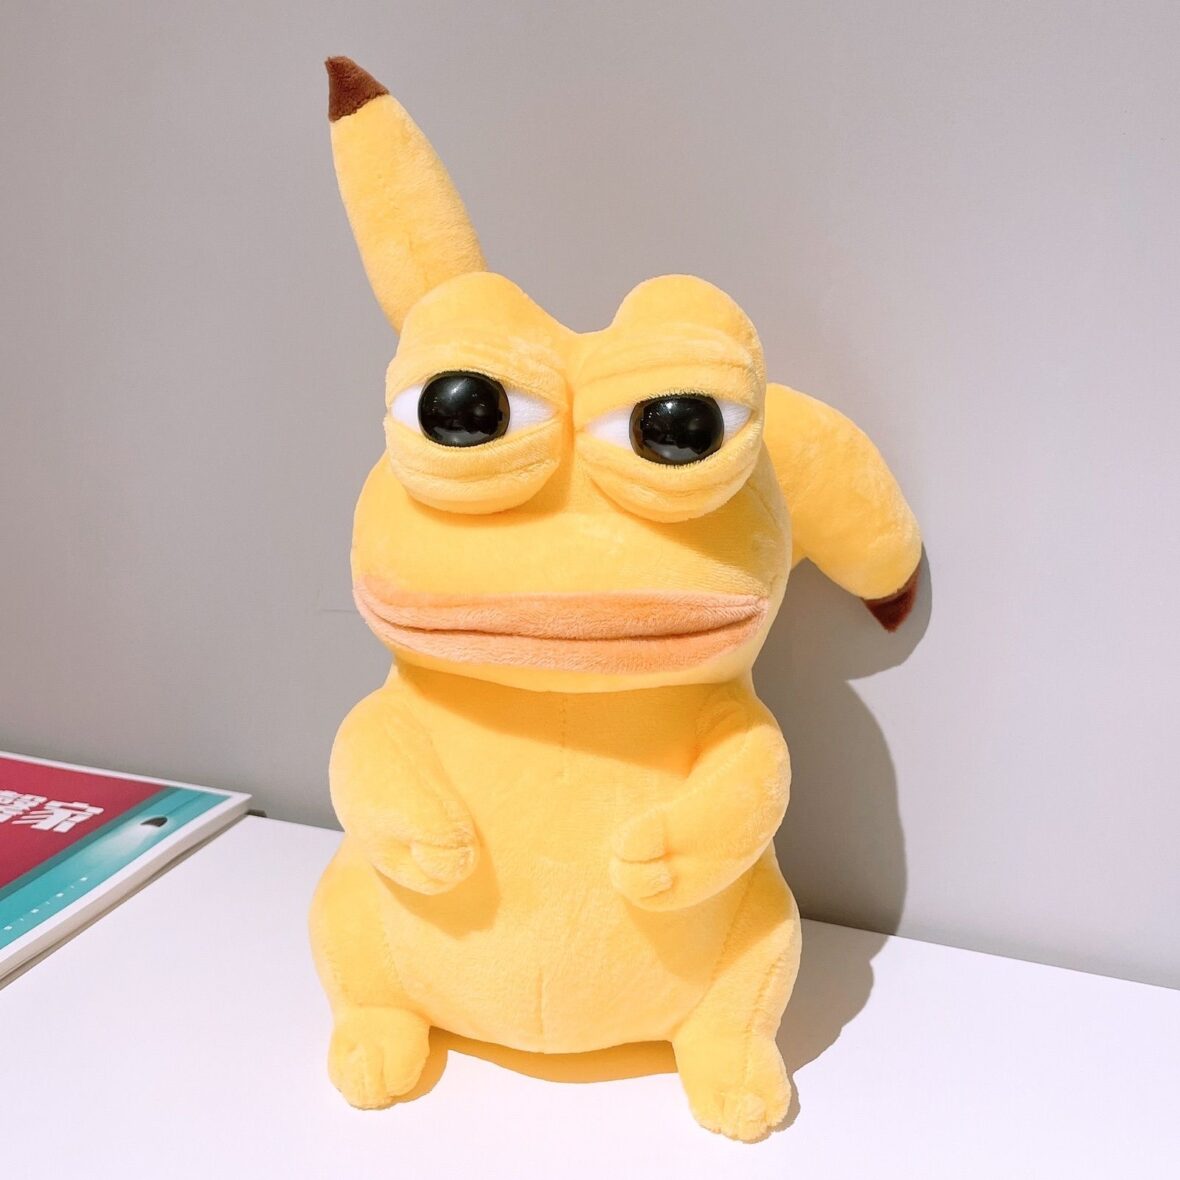 26cm Pepe The Frog Soft Stuffed Plush Toy